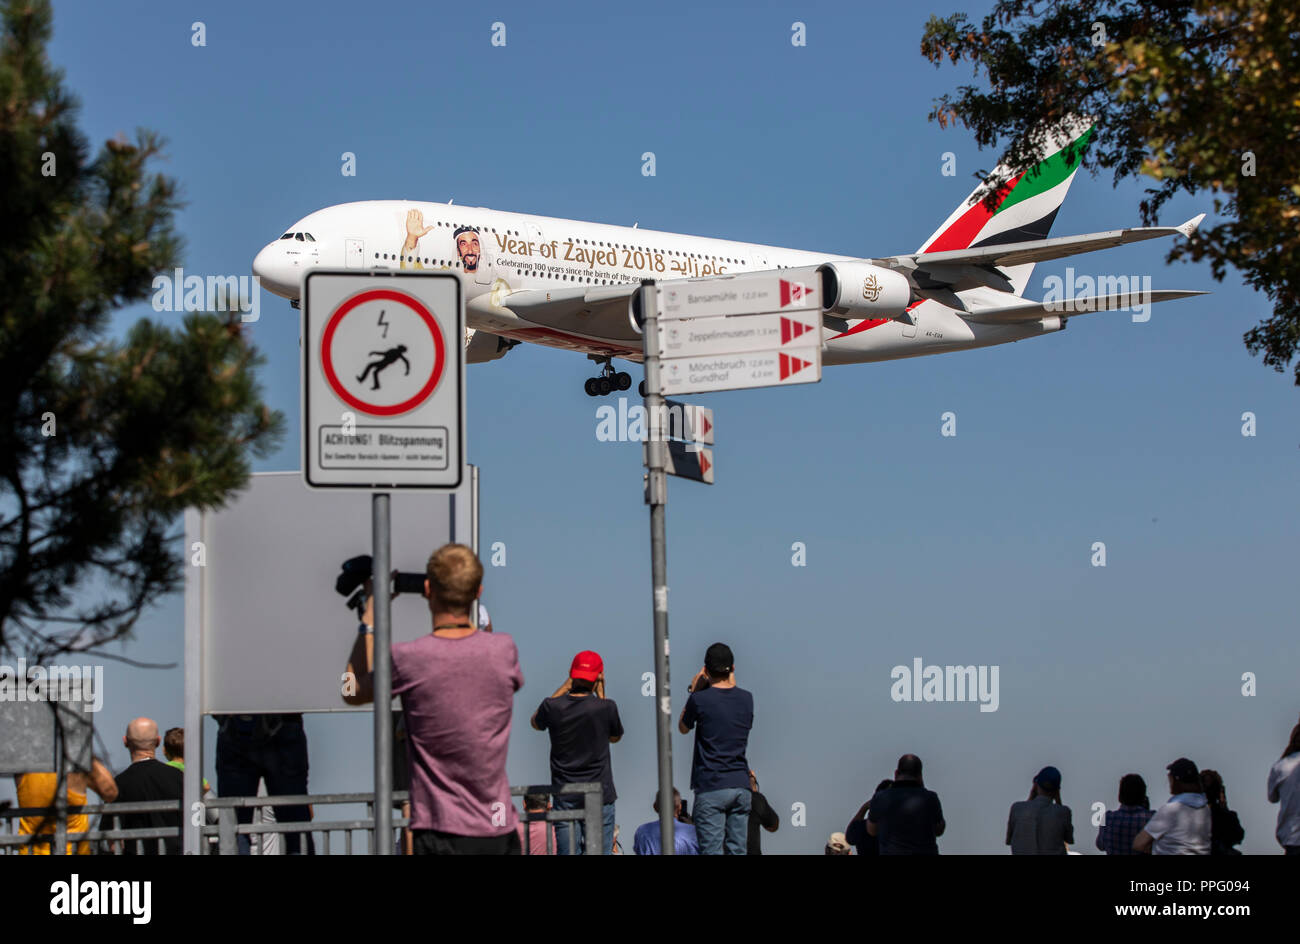 Frankfurt / Main Airport, FRA, Fraport, Emirates Airbus A380-800, avvicinando il piano Spotter, Foto Stock